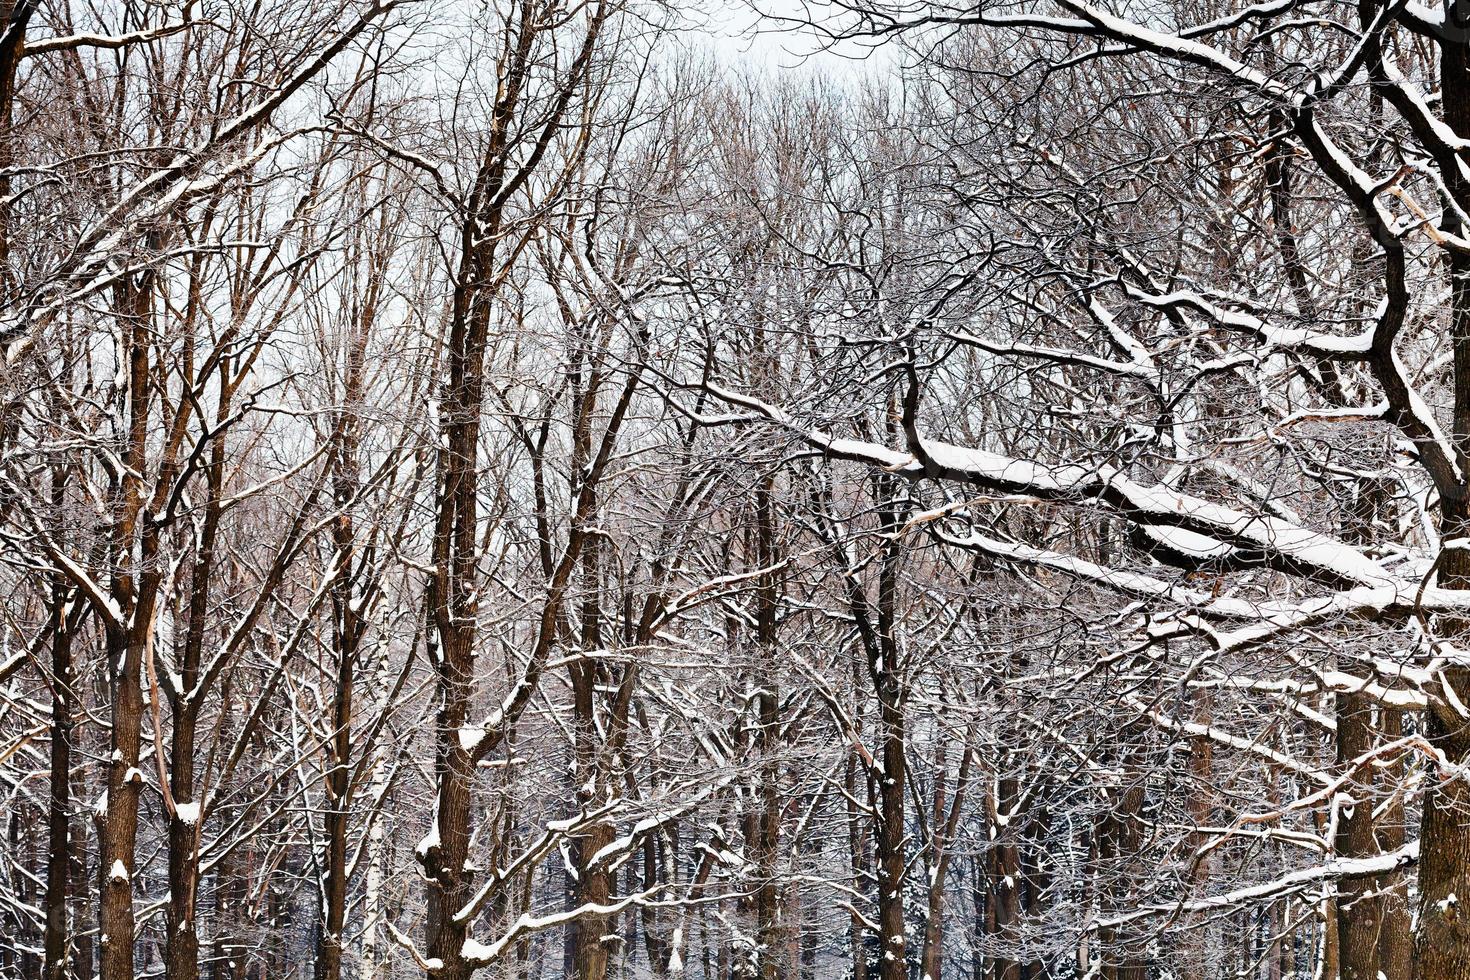 oak branches under snow photo